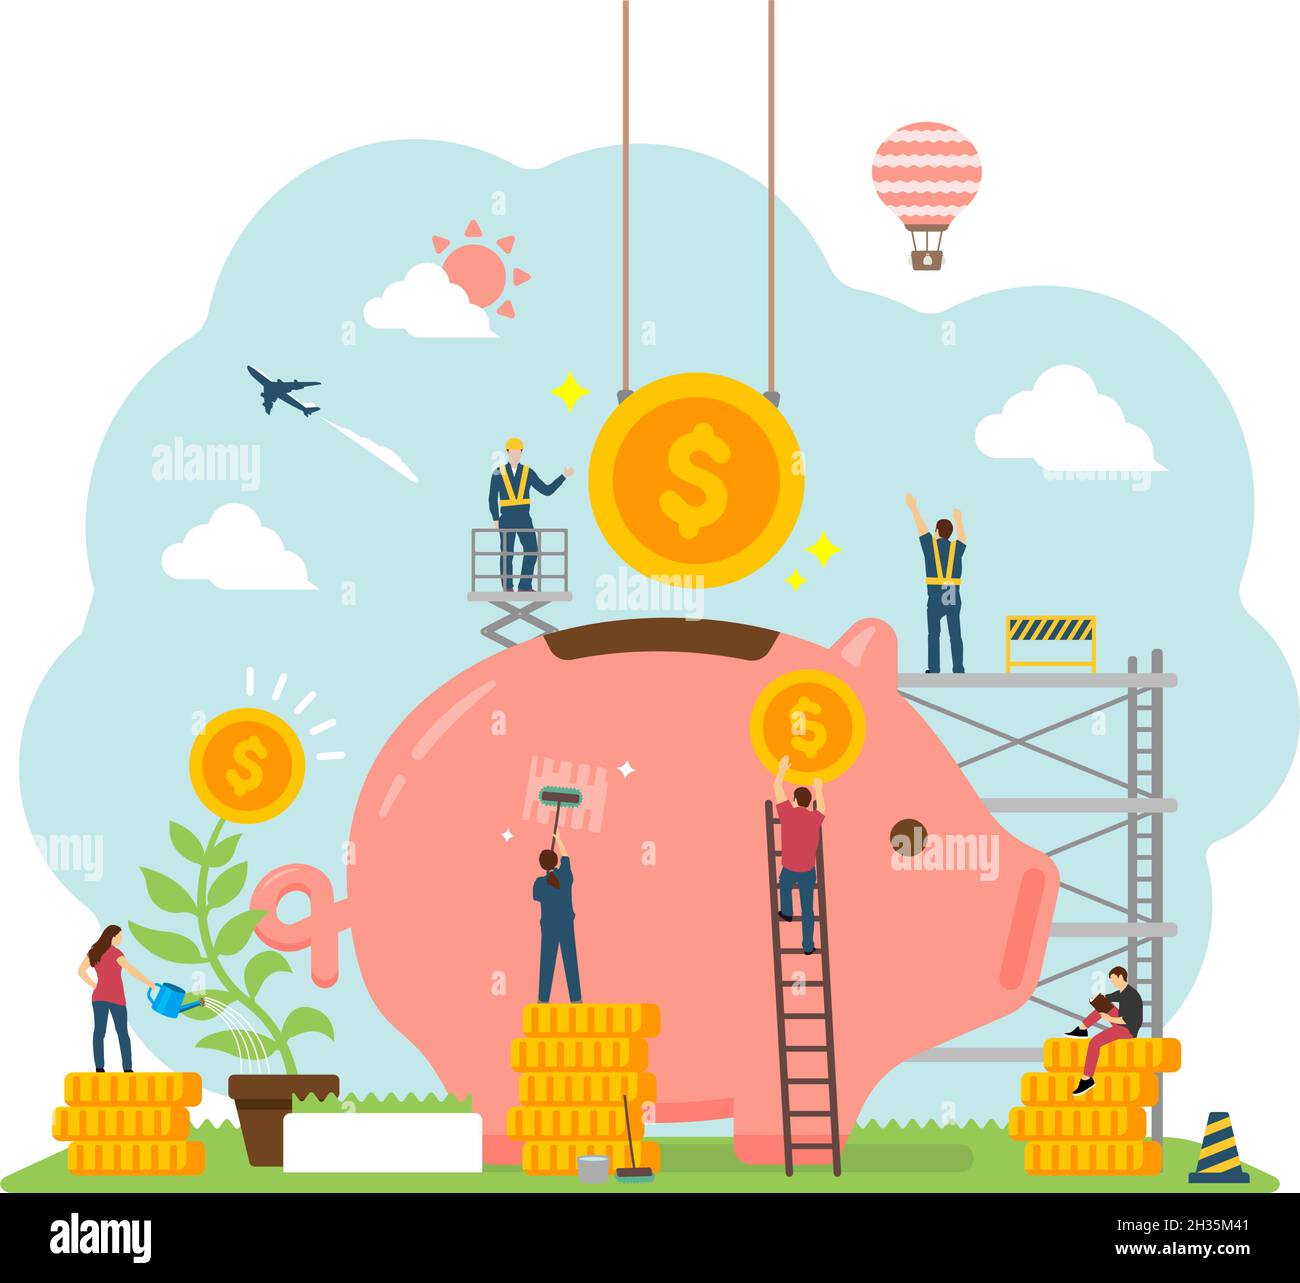 Saving money concept vector illustration Stock Vector